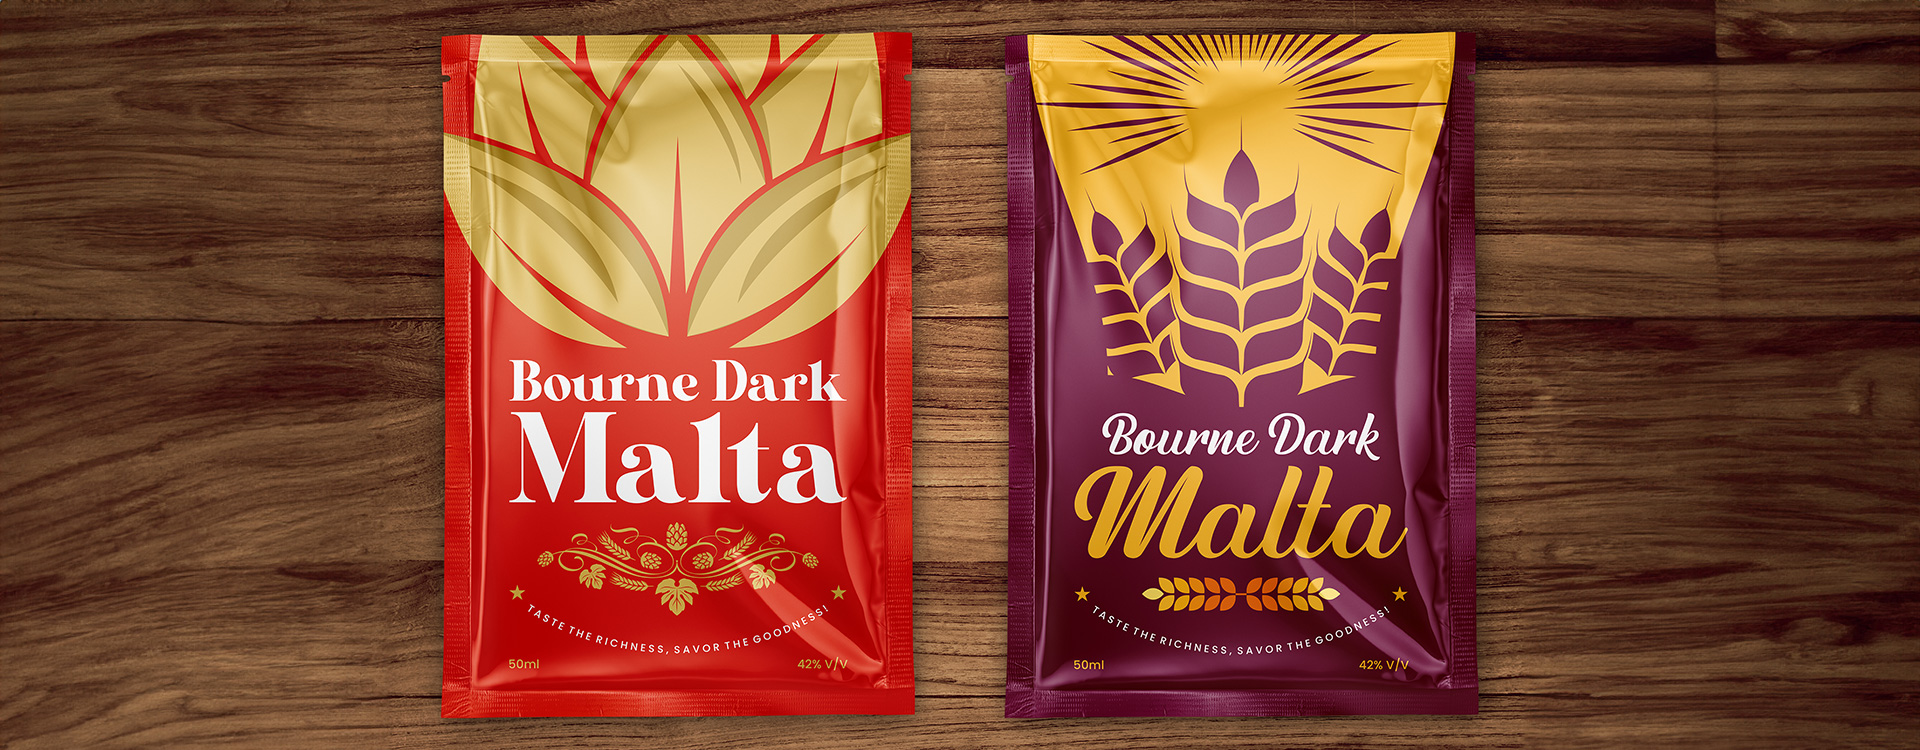 Bourn Dark Malta